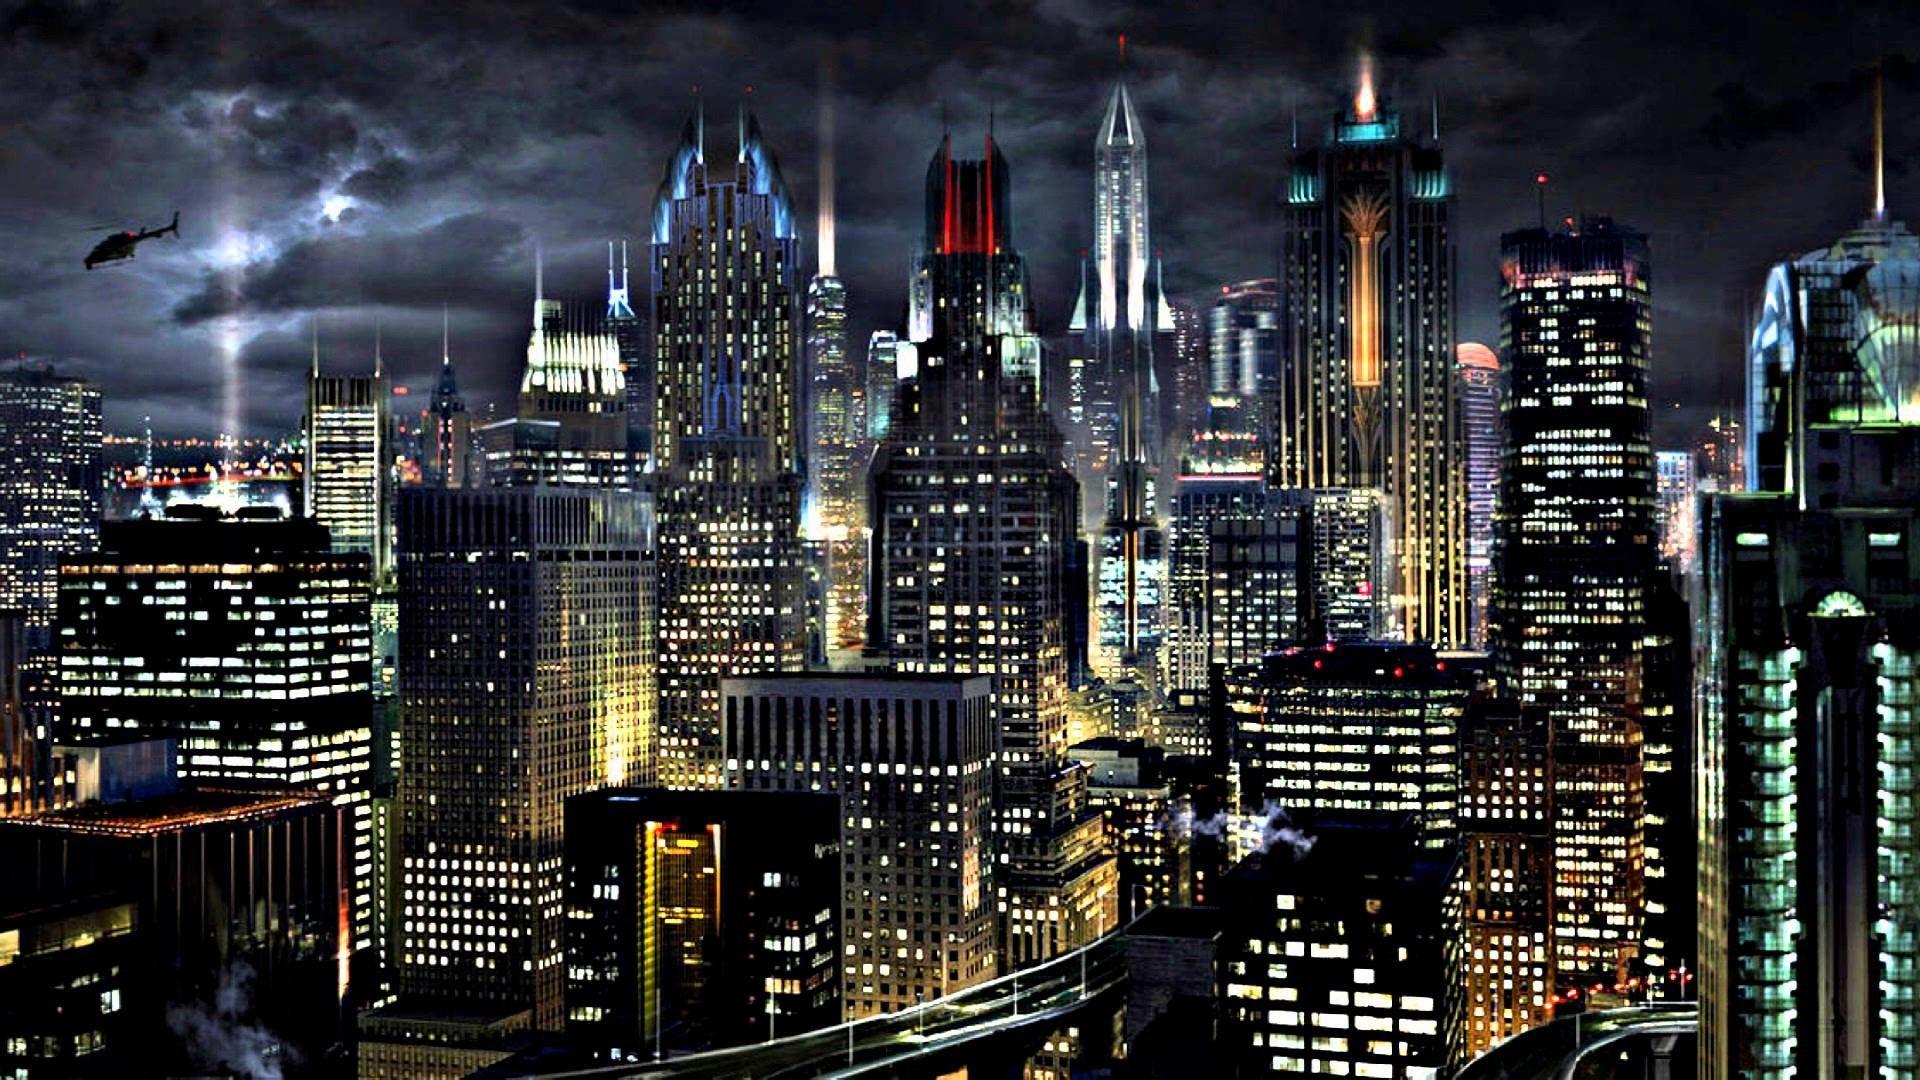 Gotham City Background 18 HD Wallpaper Free